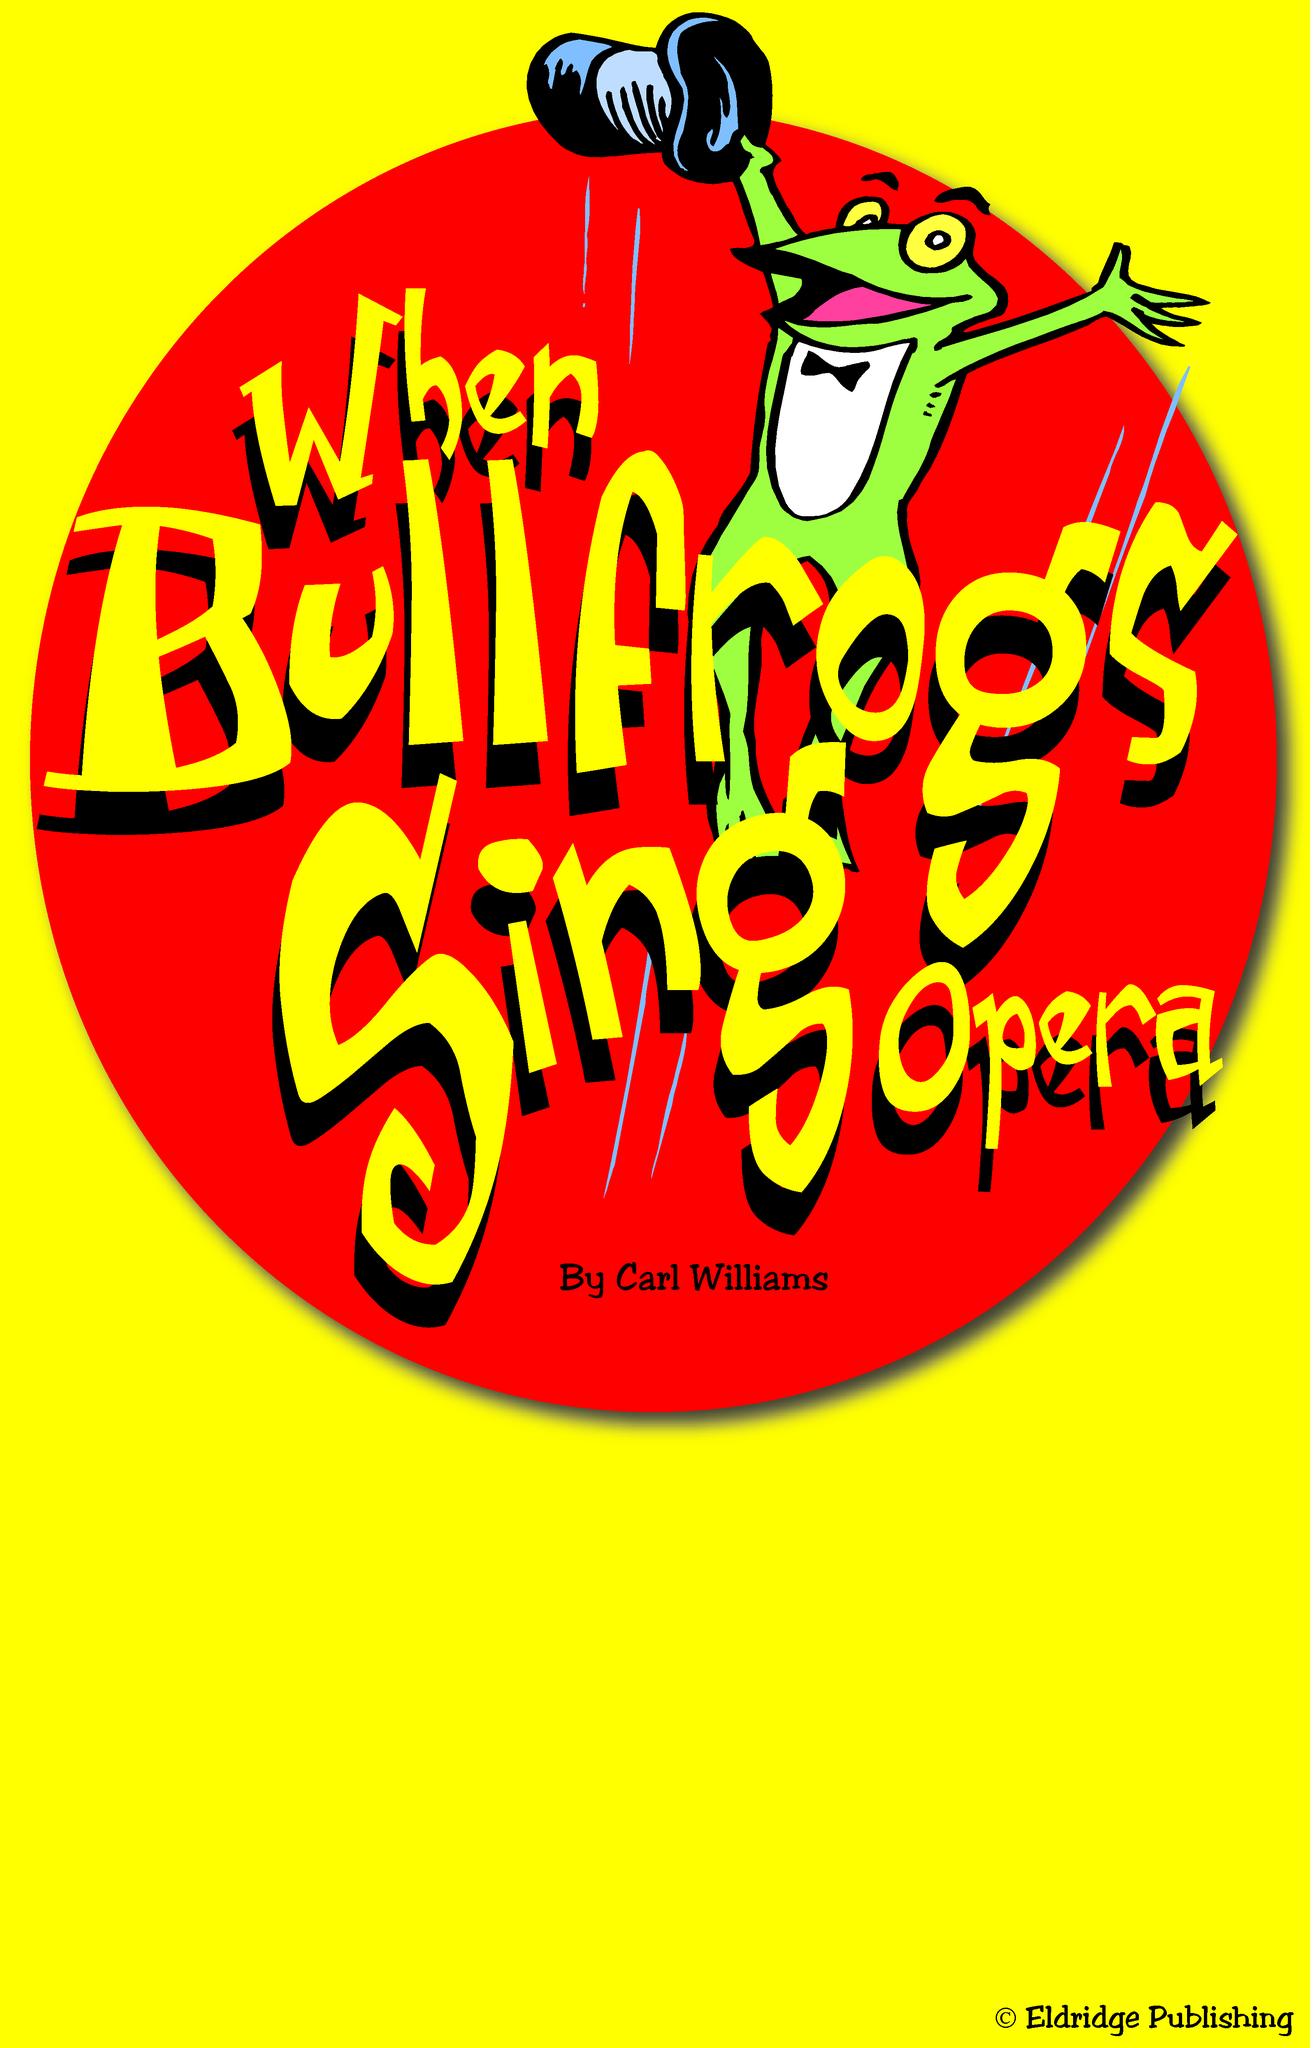 When Bullfrogs Sing Opera by S.T.A.G.E. Bulverde